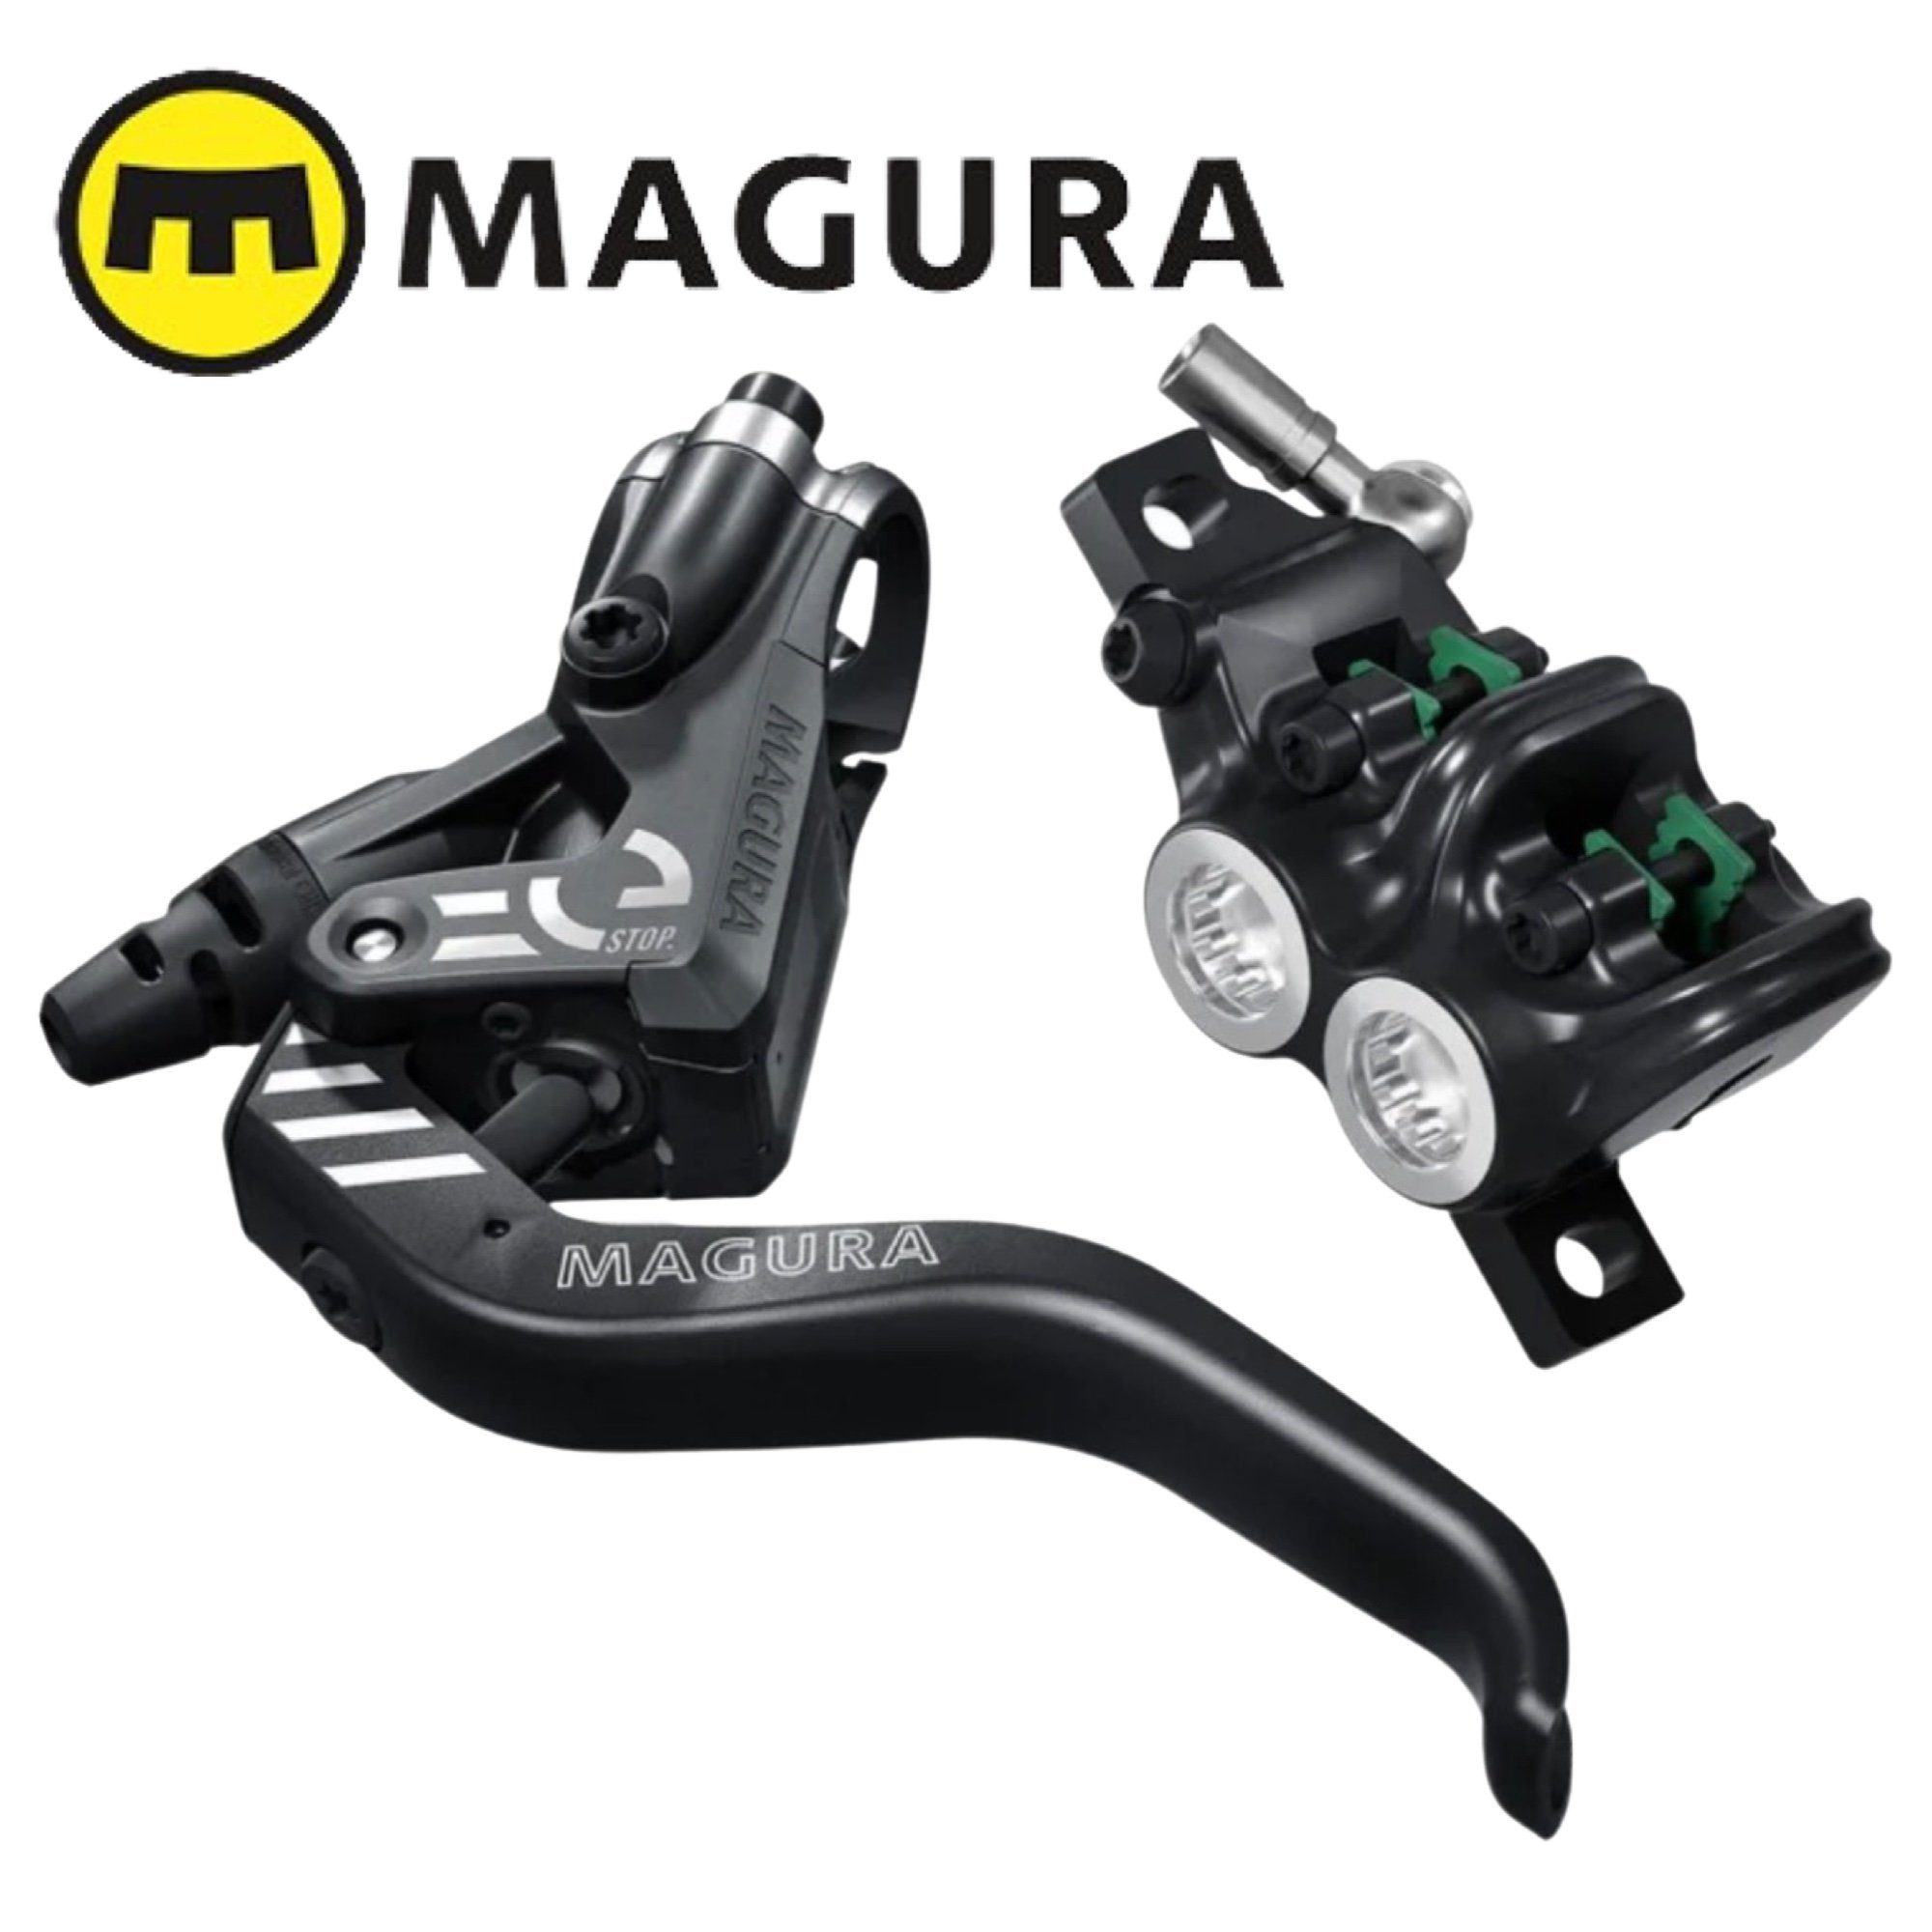 Magura Bremse MT5 Scheibenbremse Aluminium-Leichtbau-Hebel 2-Finger Magura eStop mit